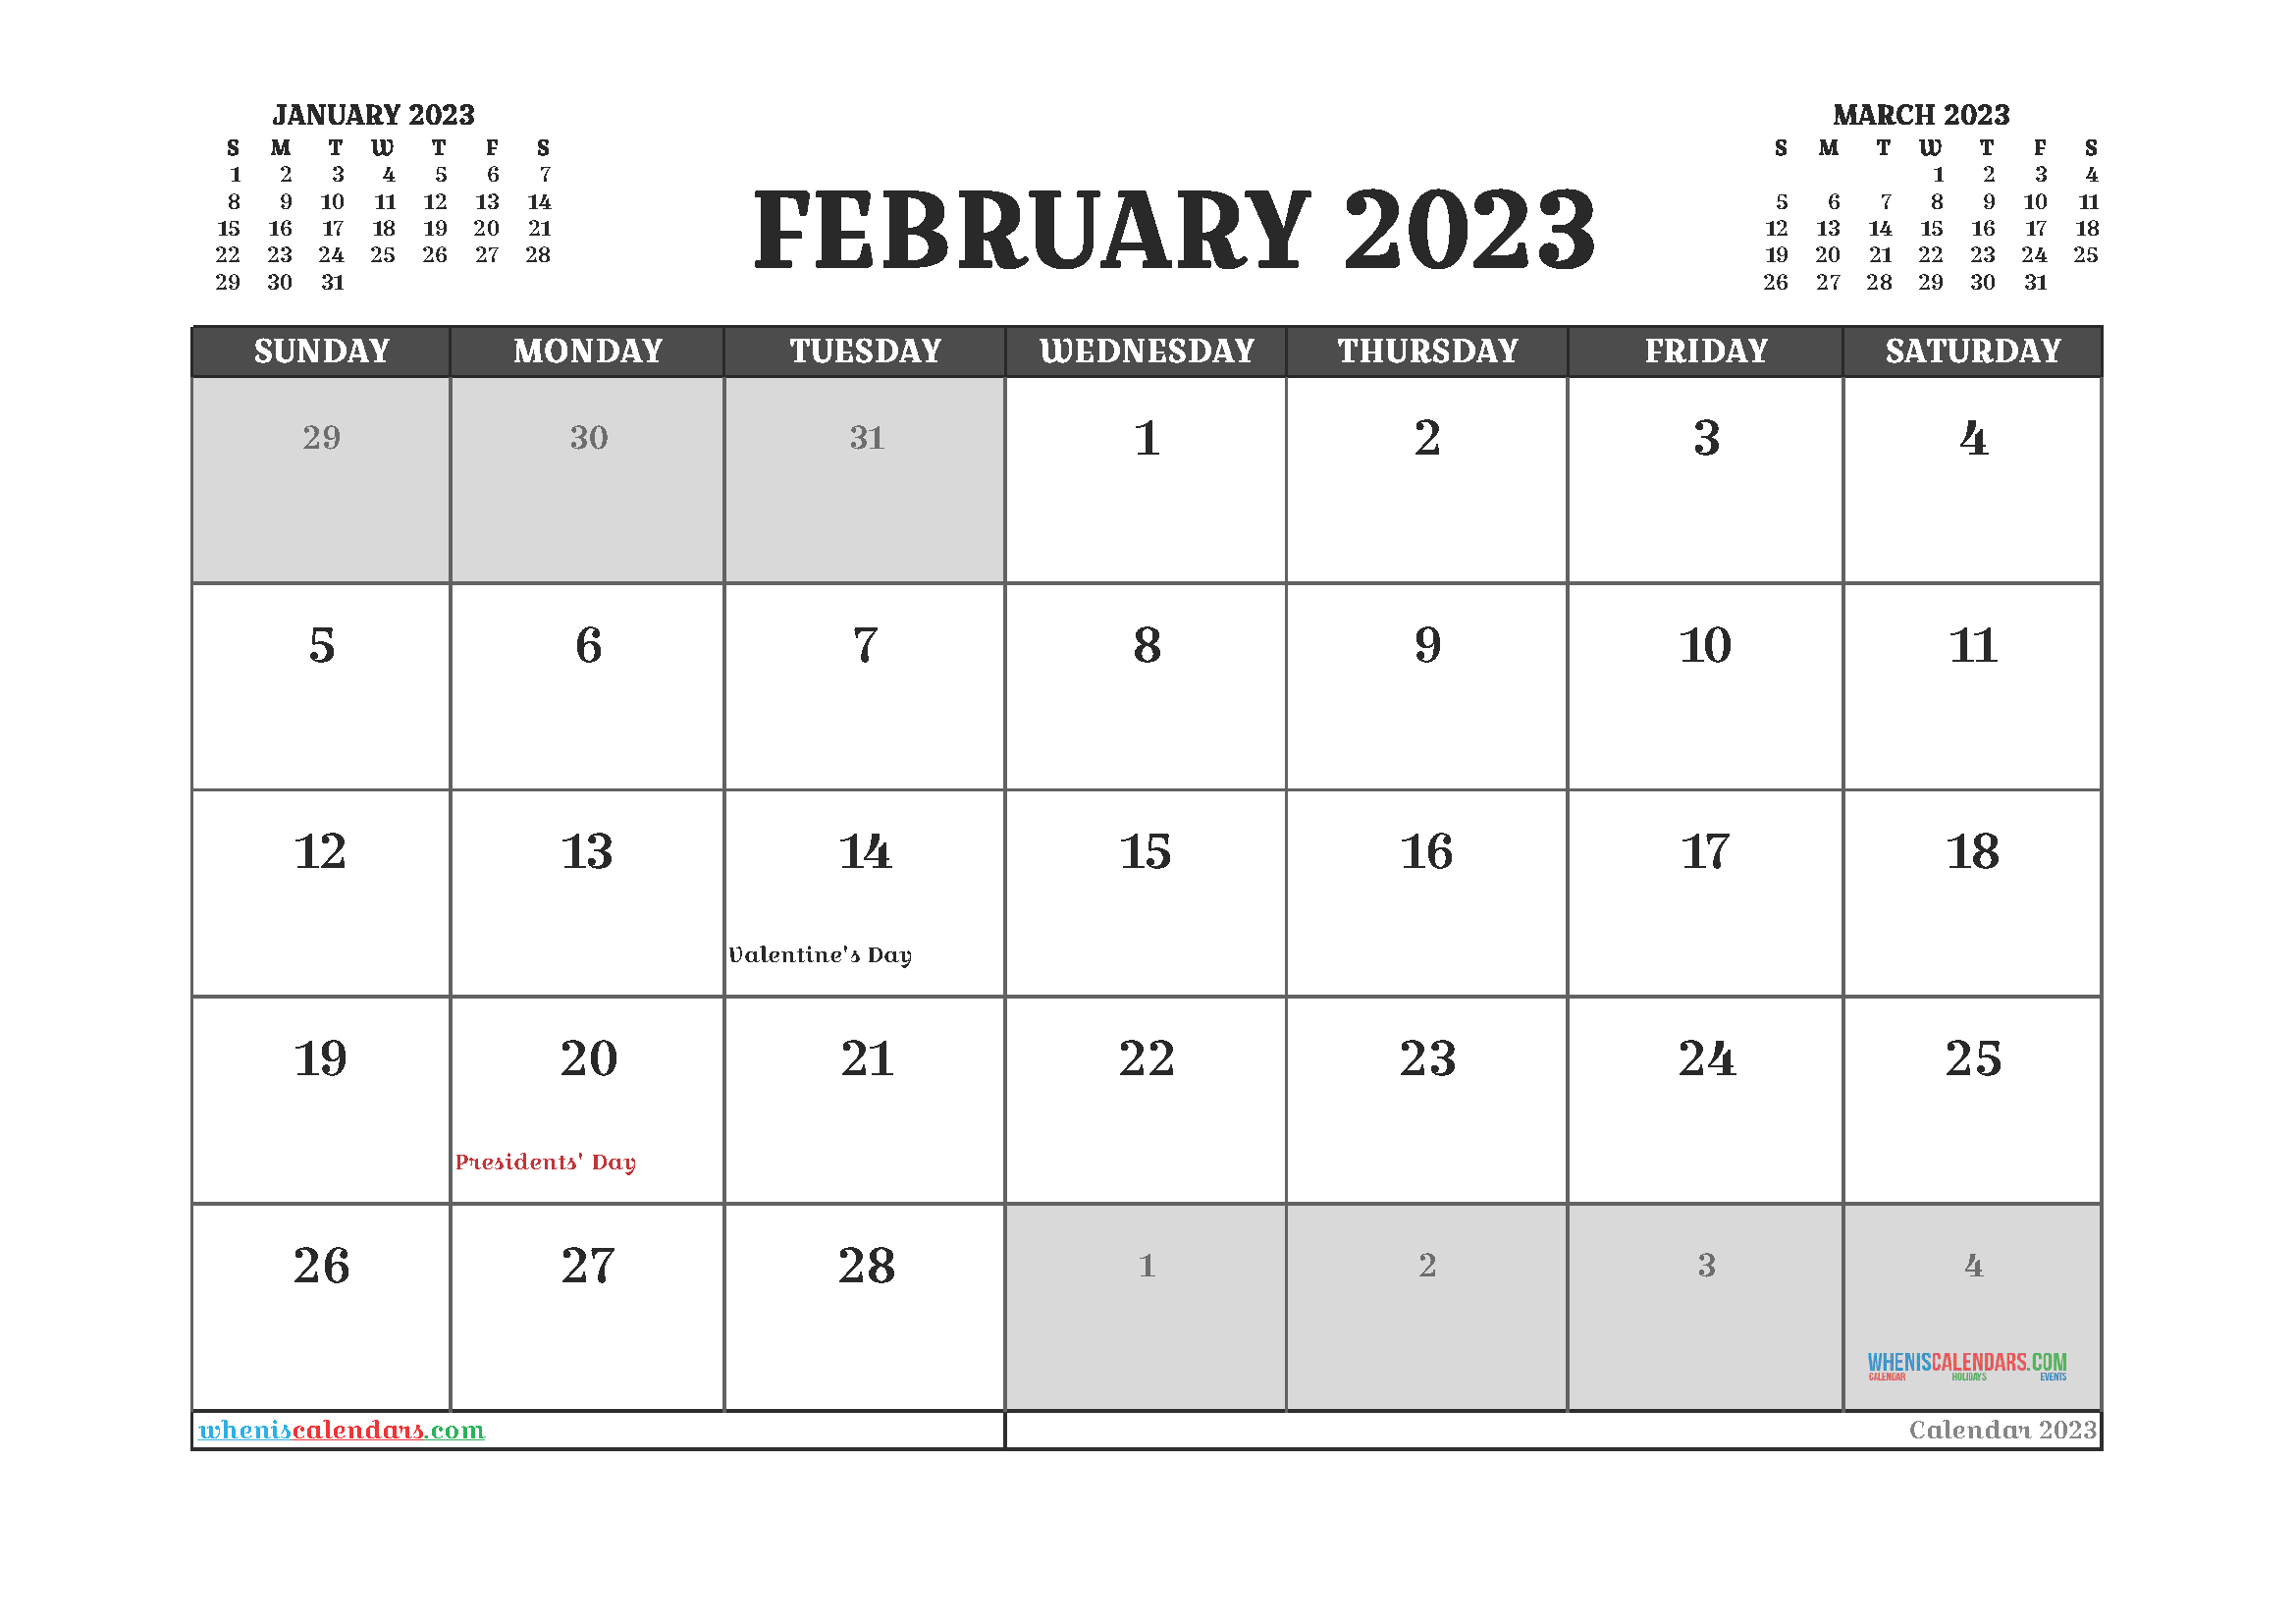 Free February 2023 Printable Calendar